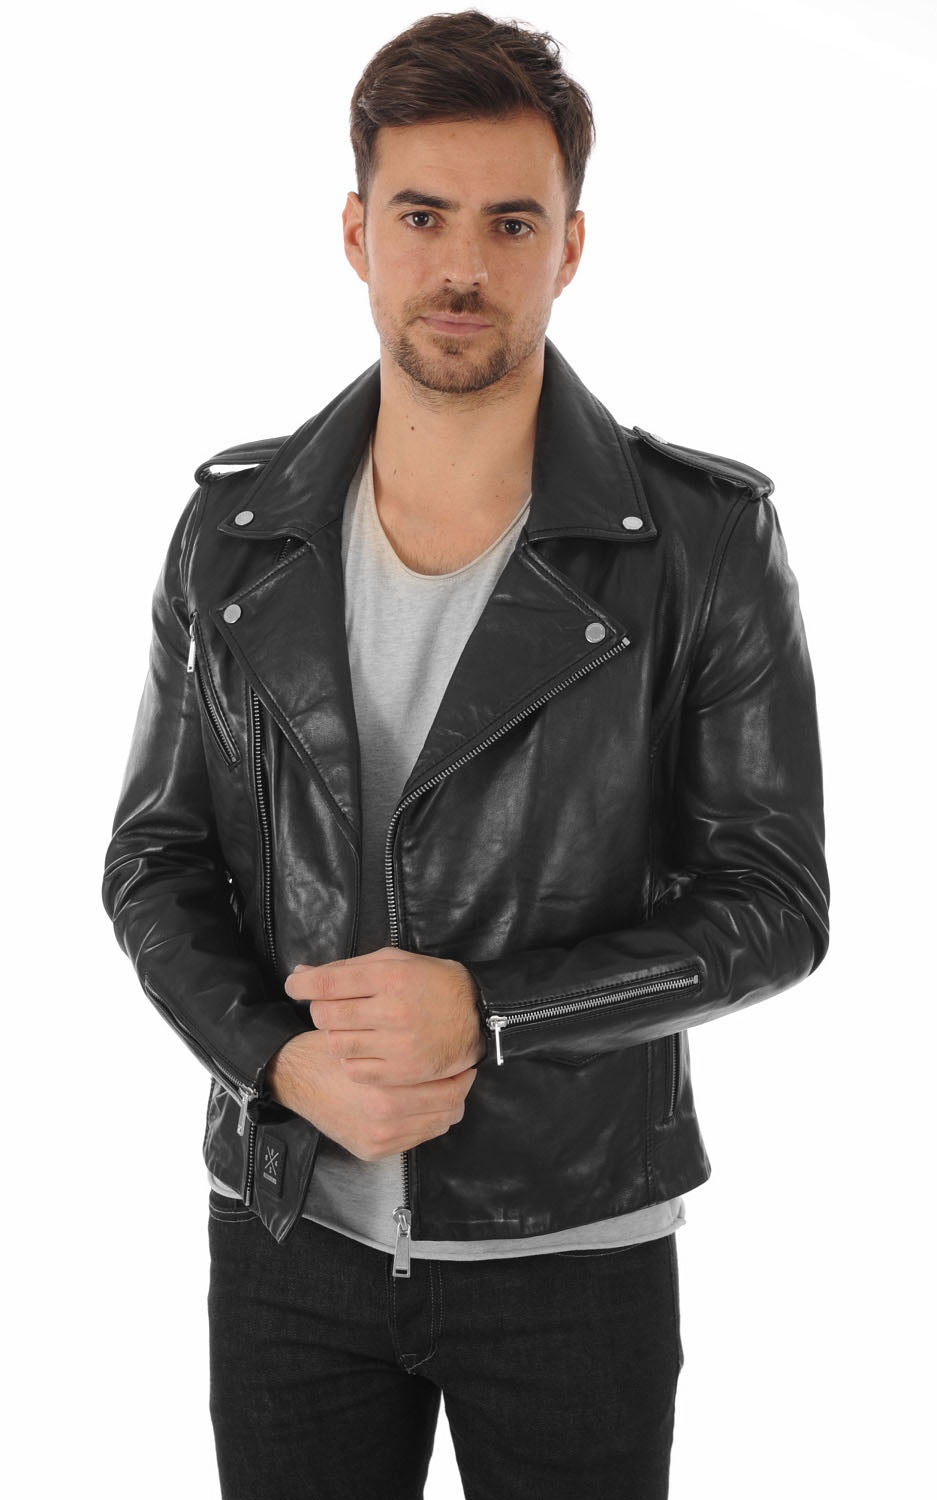 Men Genuine Leather Jacket MJ 10 SkinOutfit